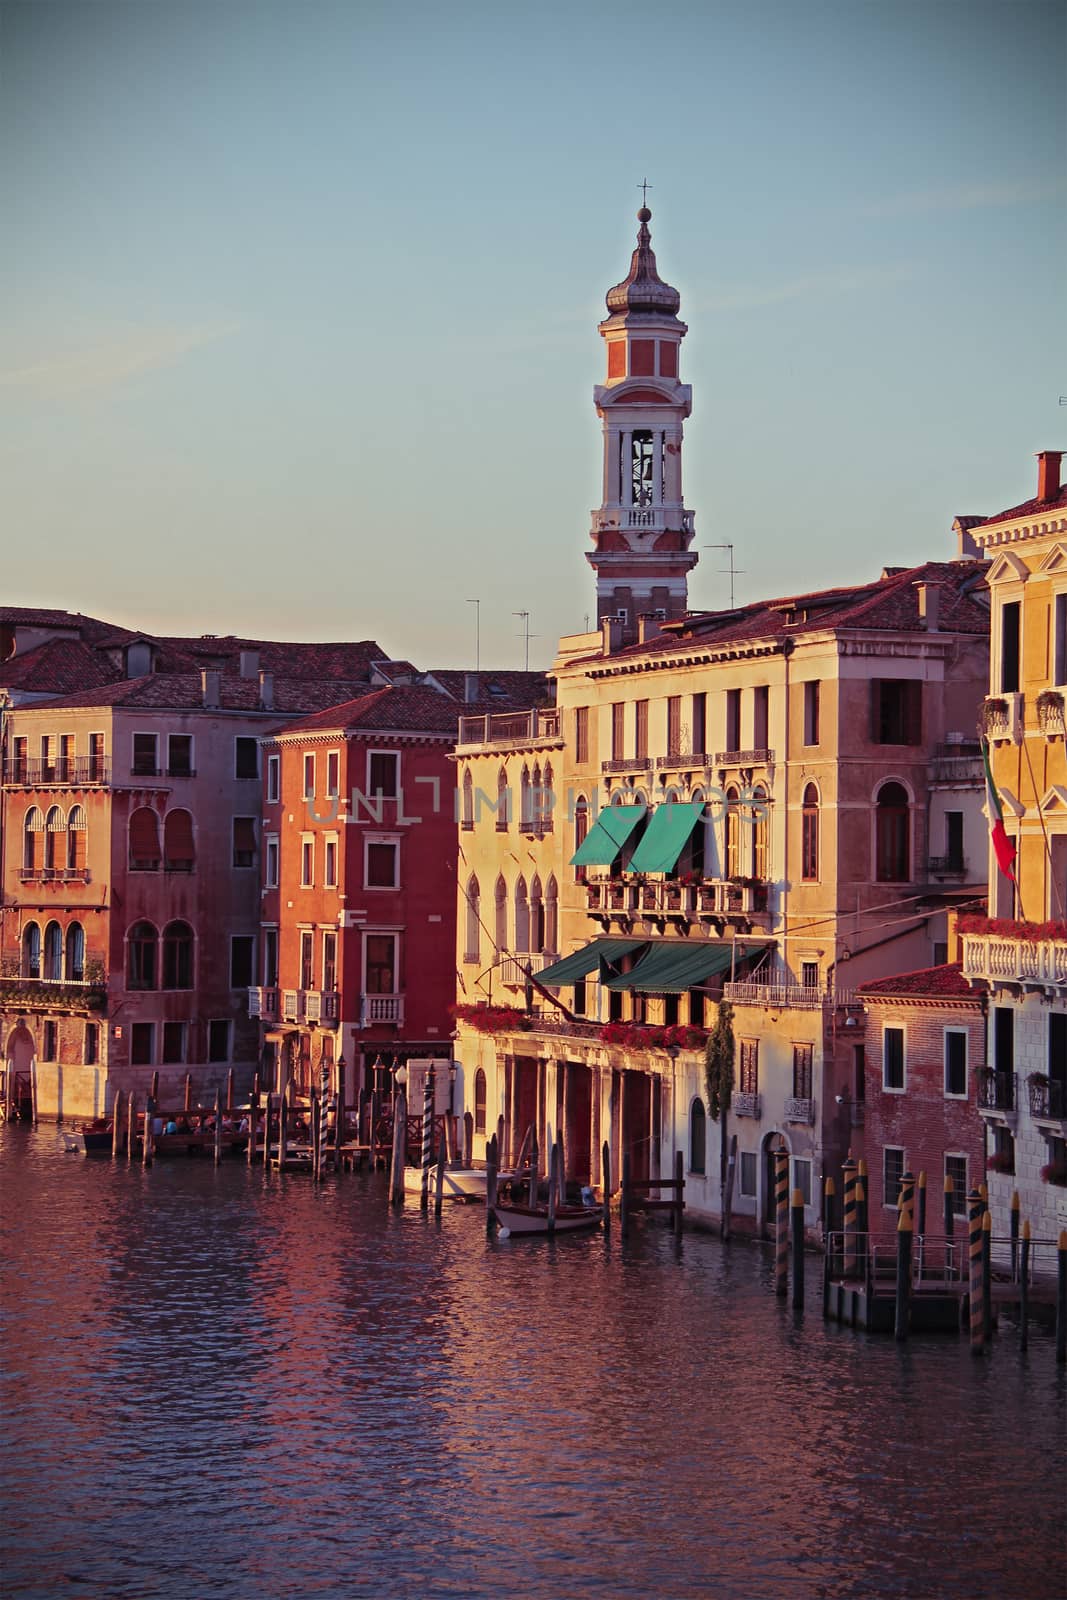 Grand canal in Venezia, Italy